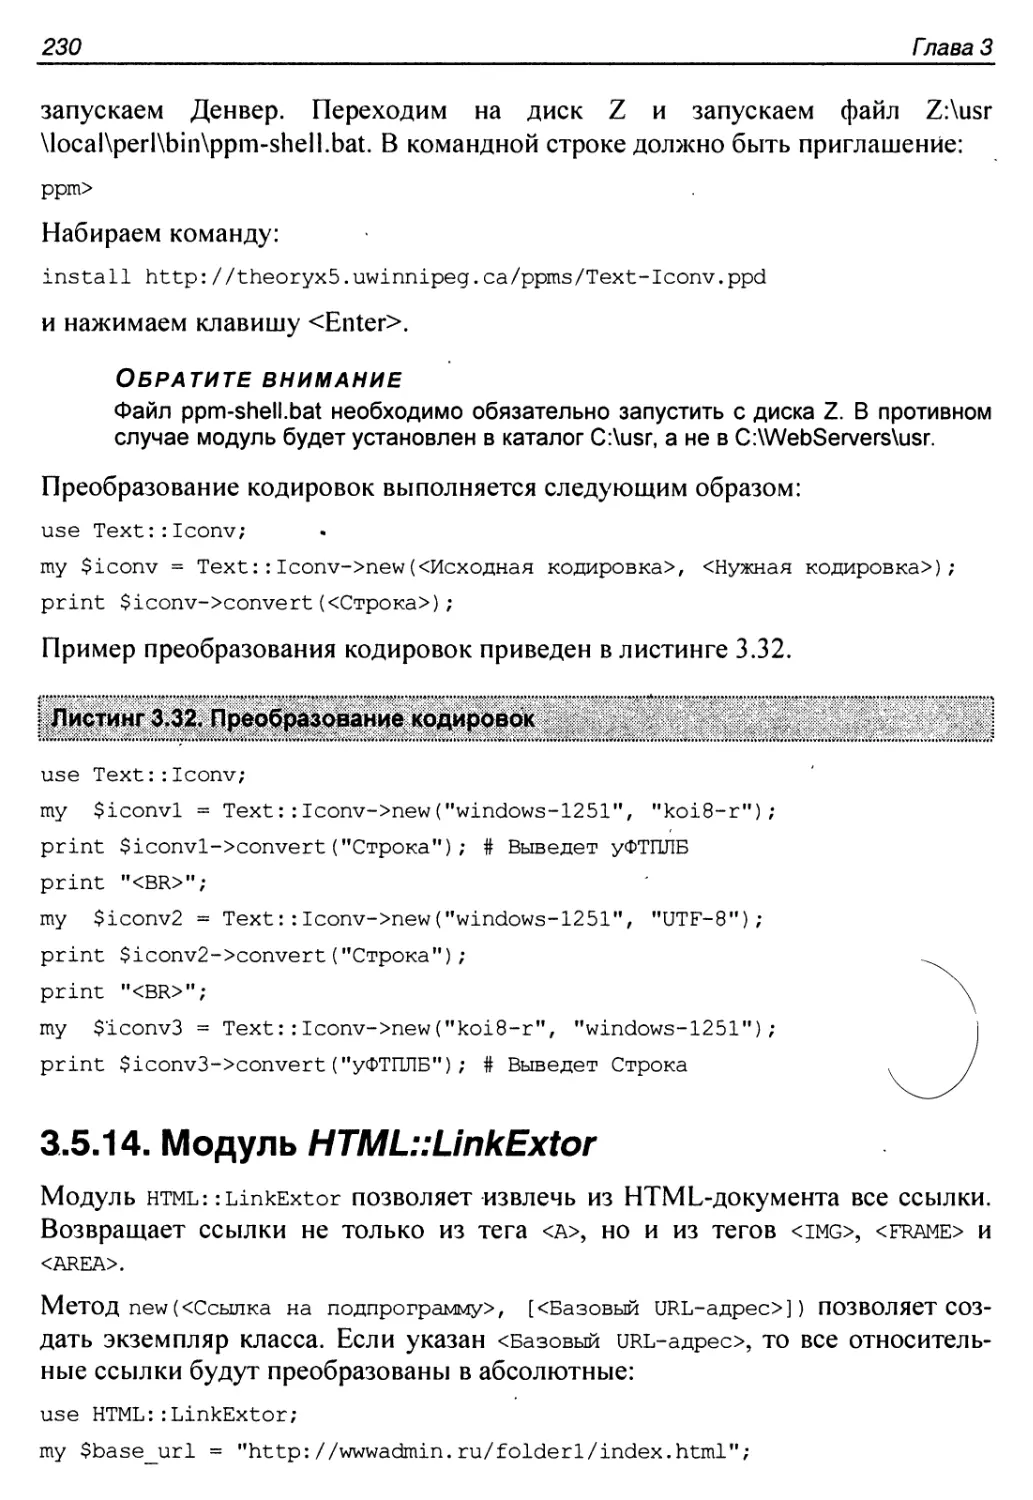 3.5.14. Модуль HTML::LinkExtor